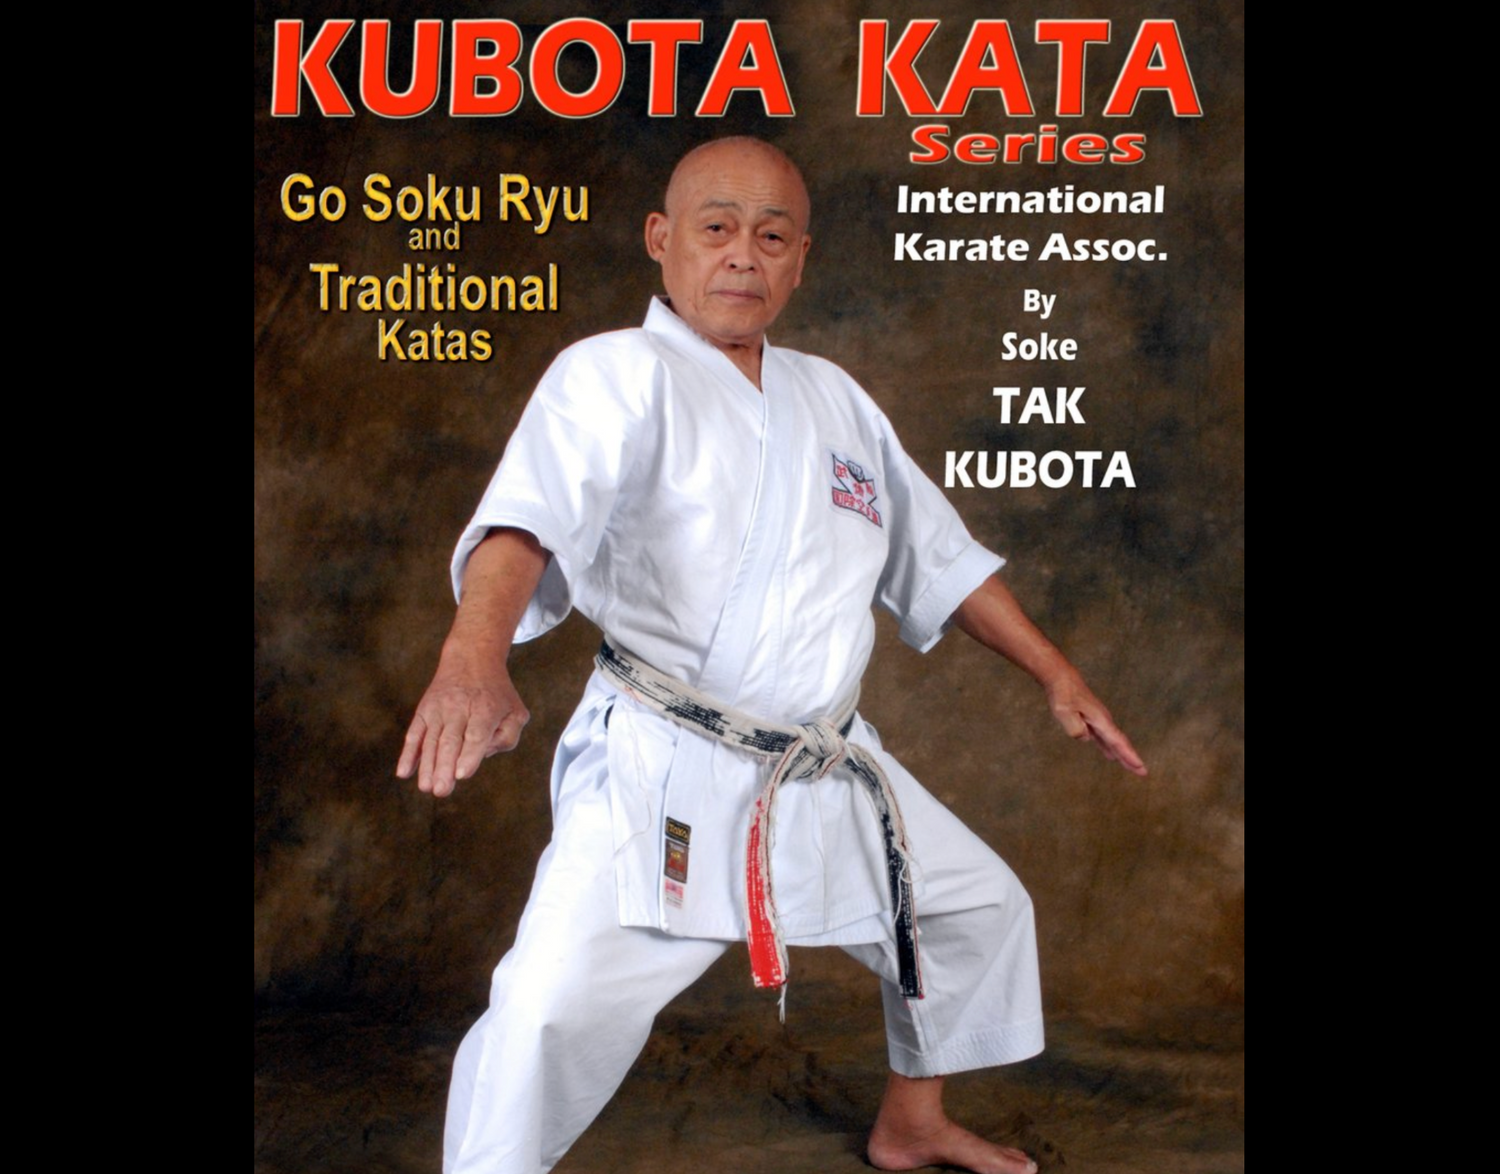 Serie Kubota Kata de Tak Kubota (bajo demanda)